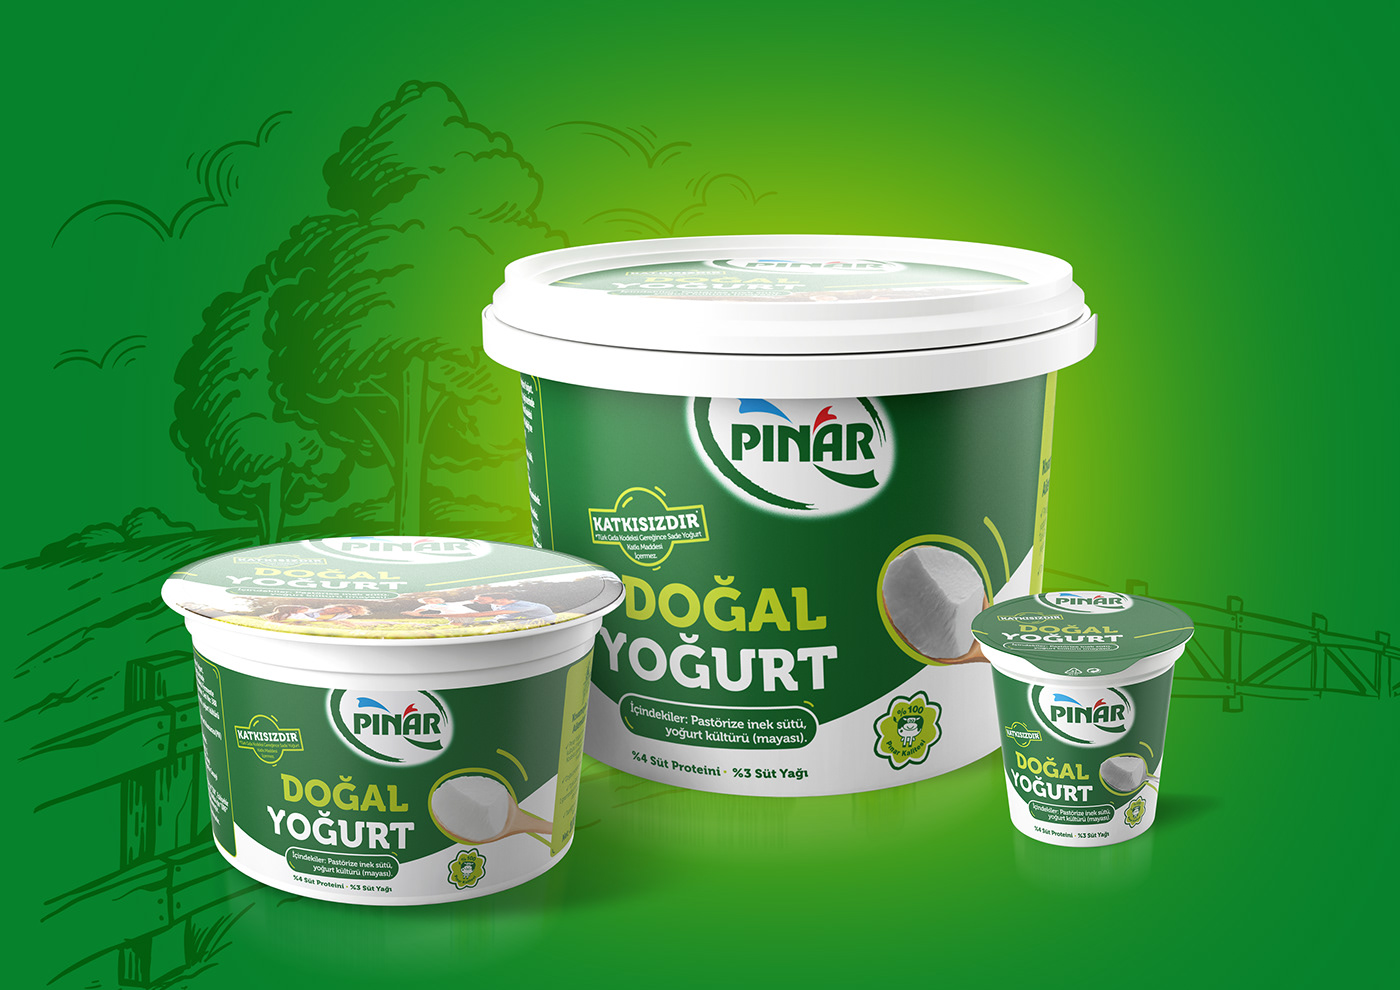 PINAR yoghurt yogurt Packaging design